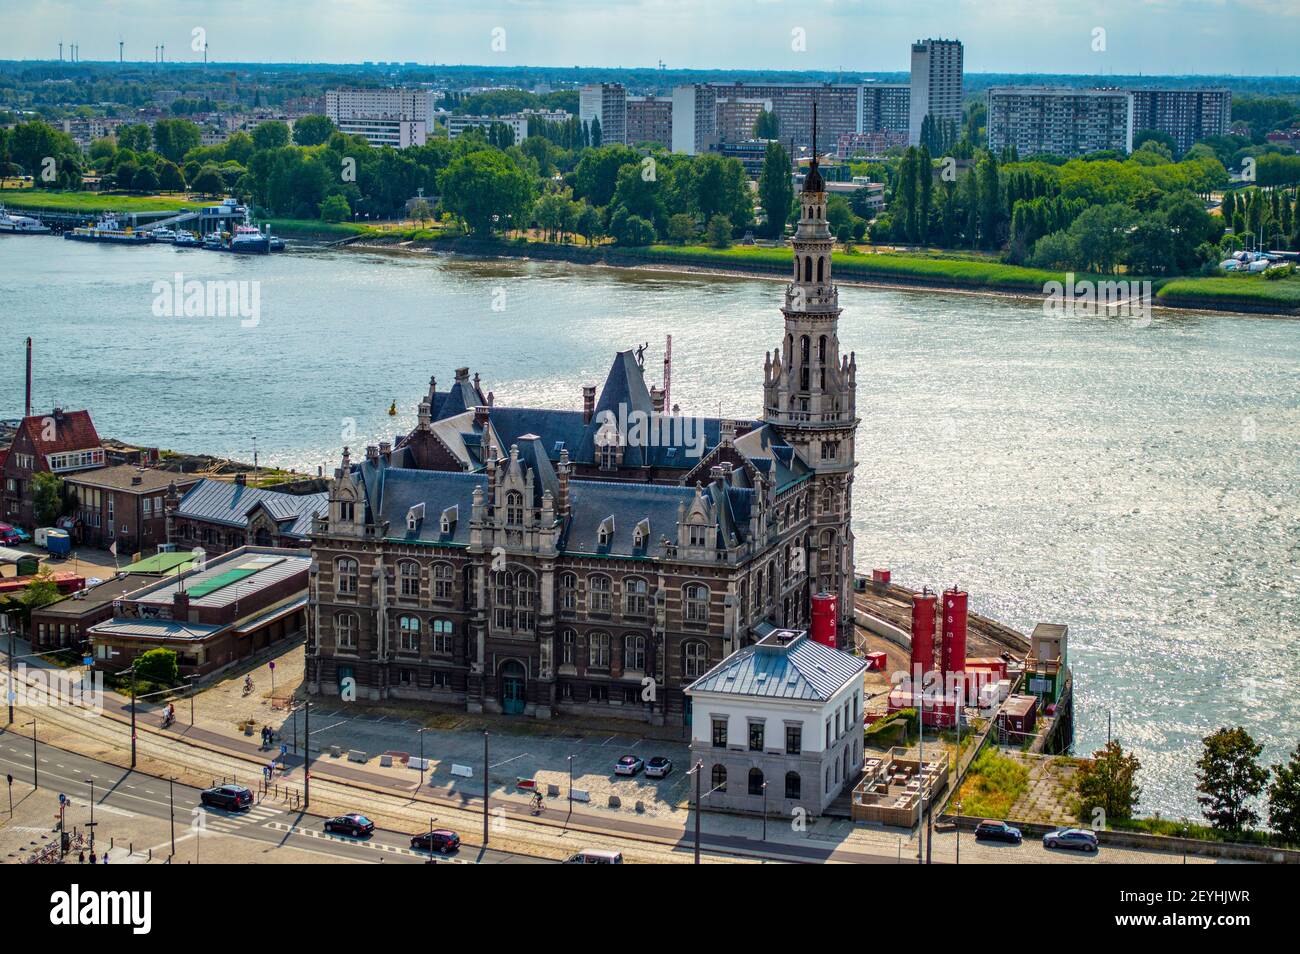 Antwerp, Belgium - July 12, 2019: Aerial view of the Pilotage building in Antwerp, Belgium Stock Photo